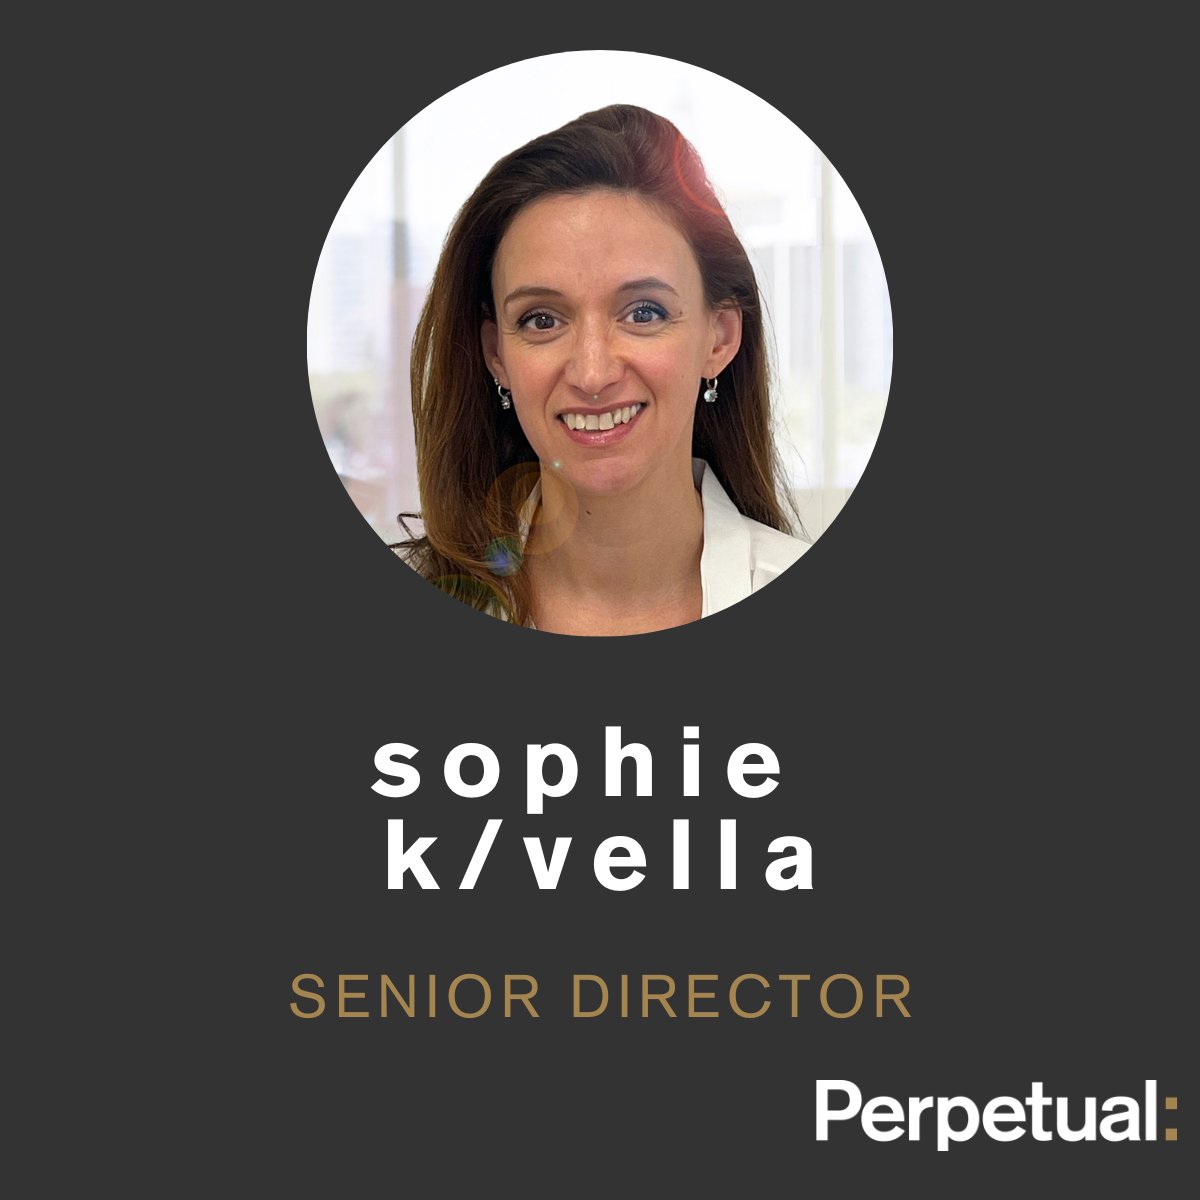 We are delighted to welcome Sophie K/vella as Senior Director at Perpetual: Paris. Welcome Sophie 
_________ 

Nous sommes ravis d'accueillir Sophie K/vella en tant que directrice principale de Perpetual: Paris.  Bienvenue Sophie  

beperpetual.com/insights/blog/…

#BePerpetual 
#NewHire